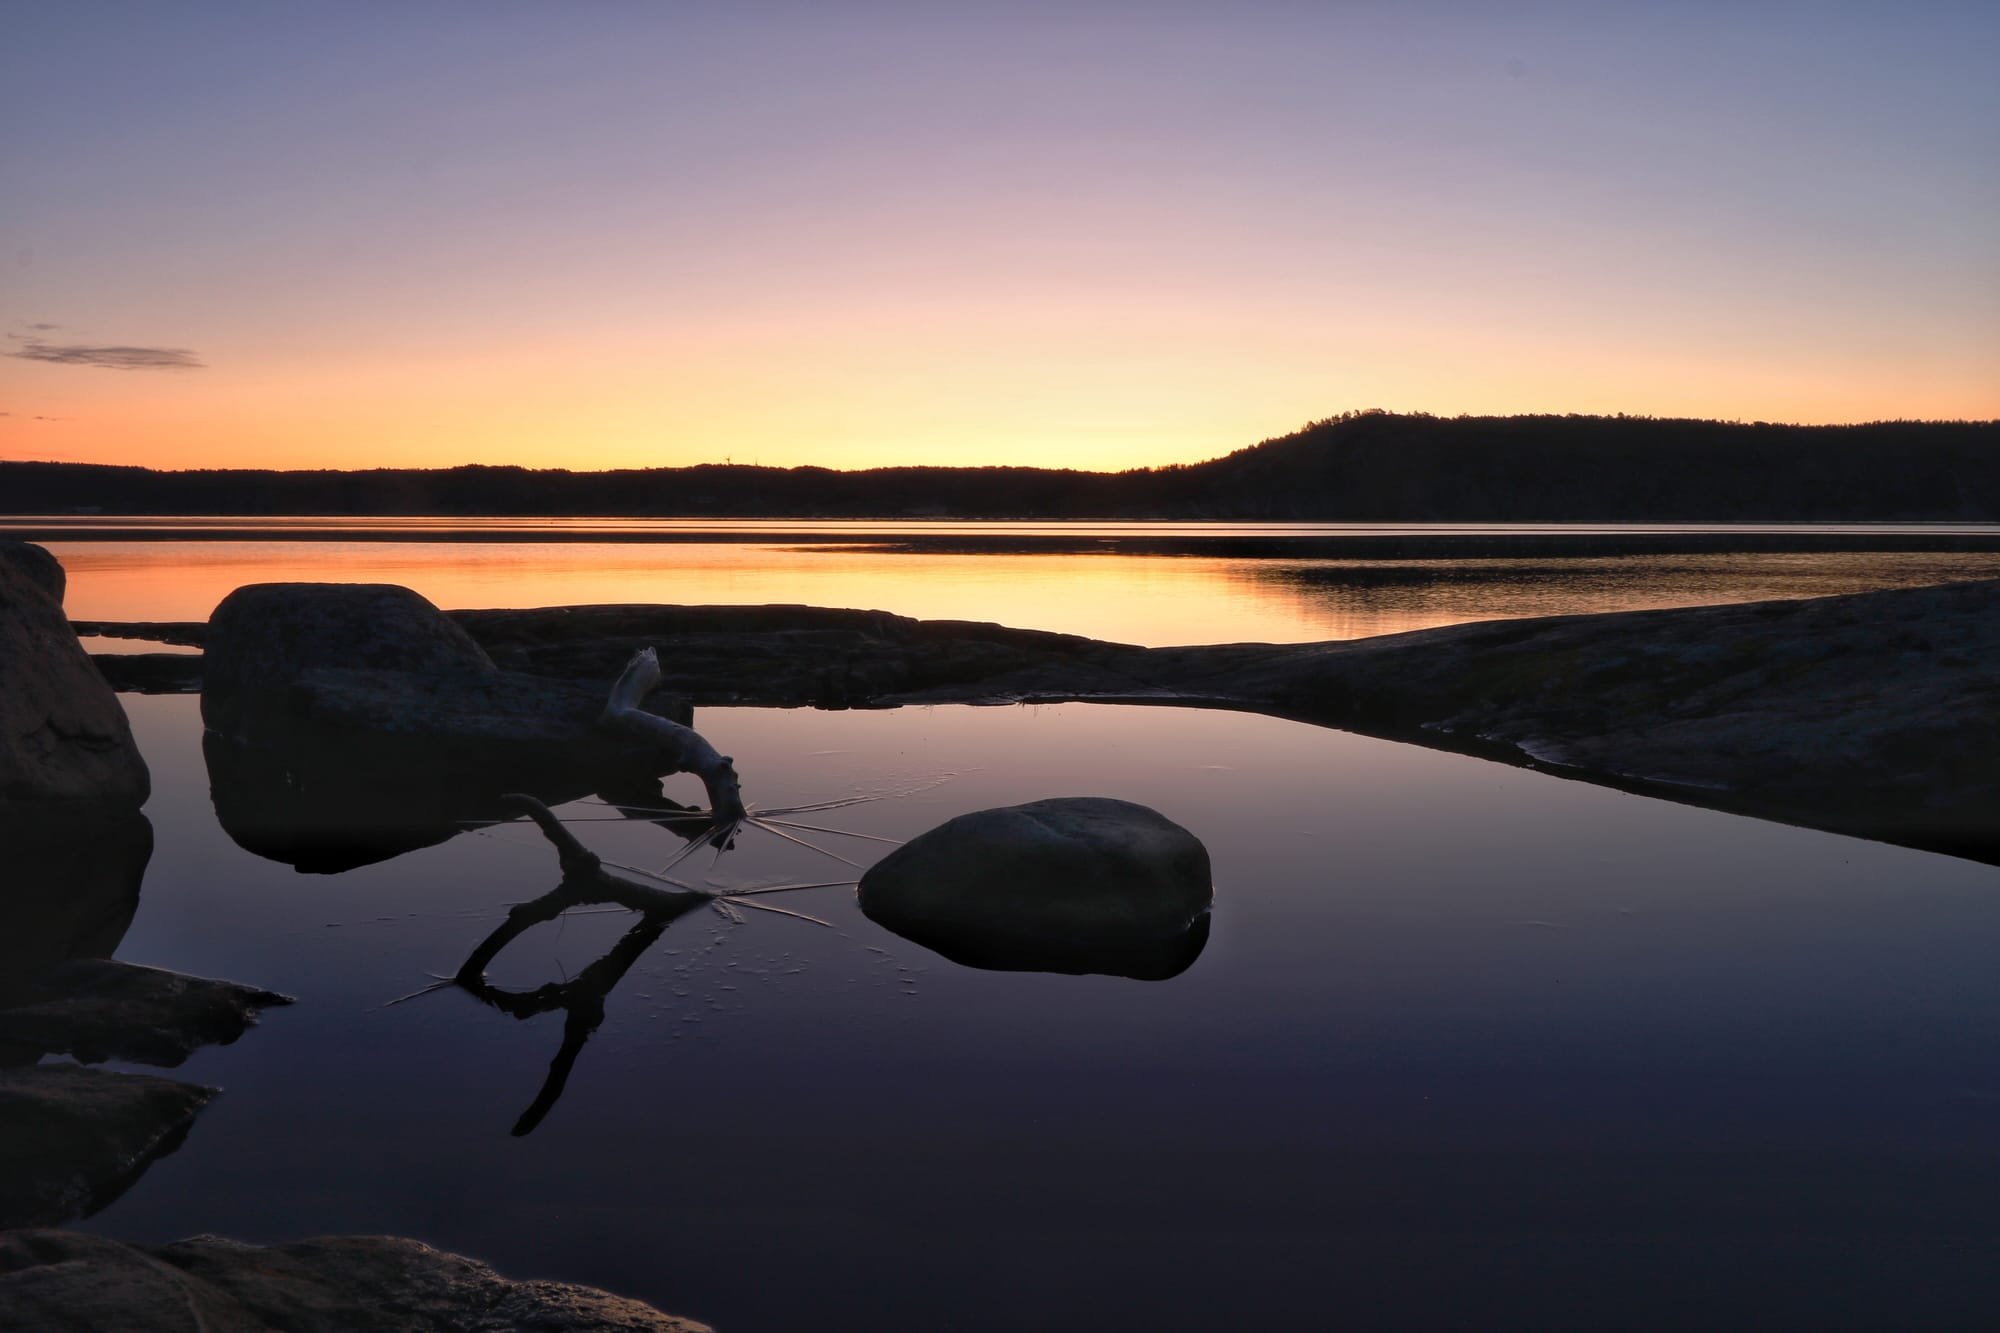 120. Early Morning in Gullmarsfjorden